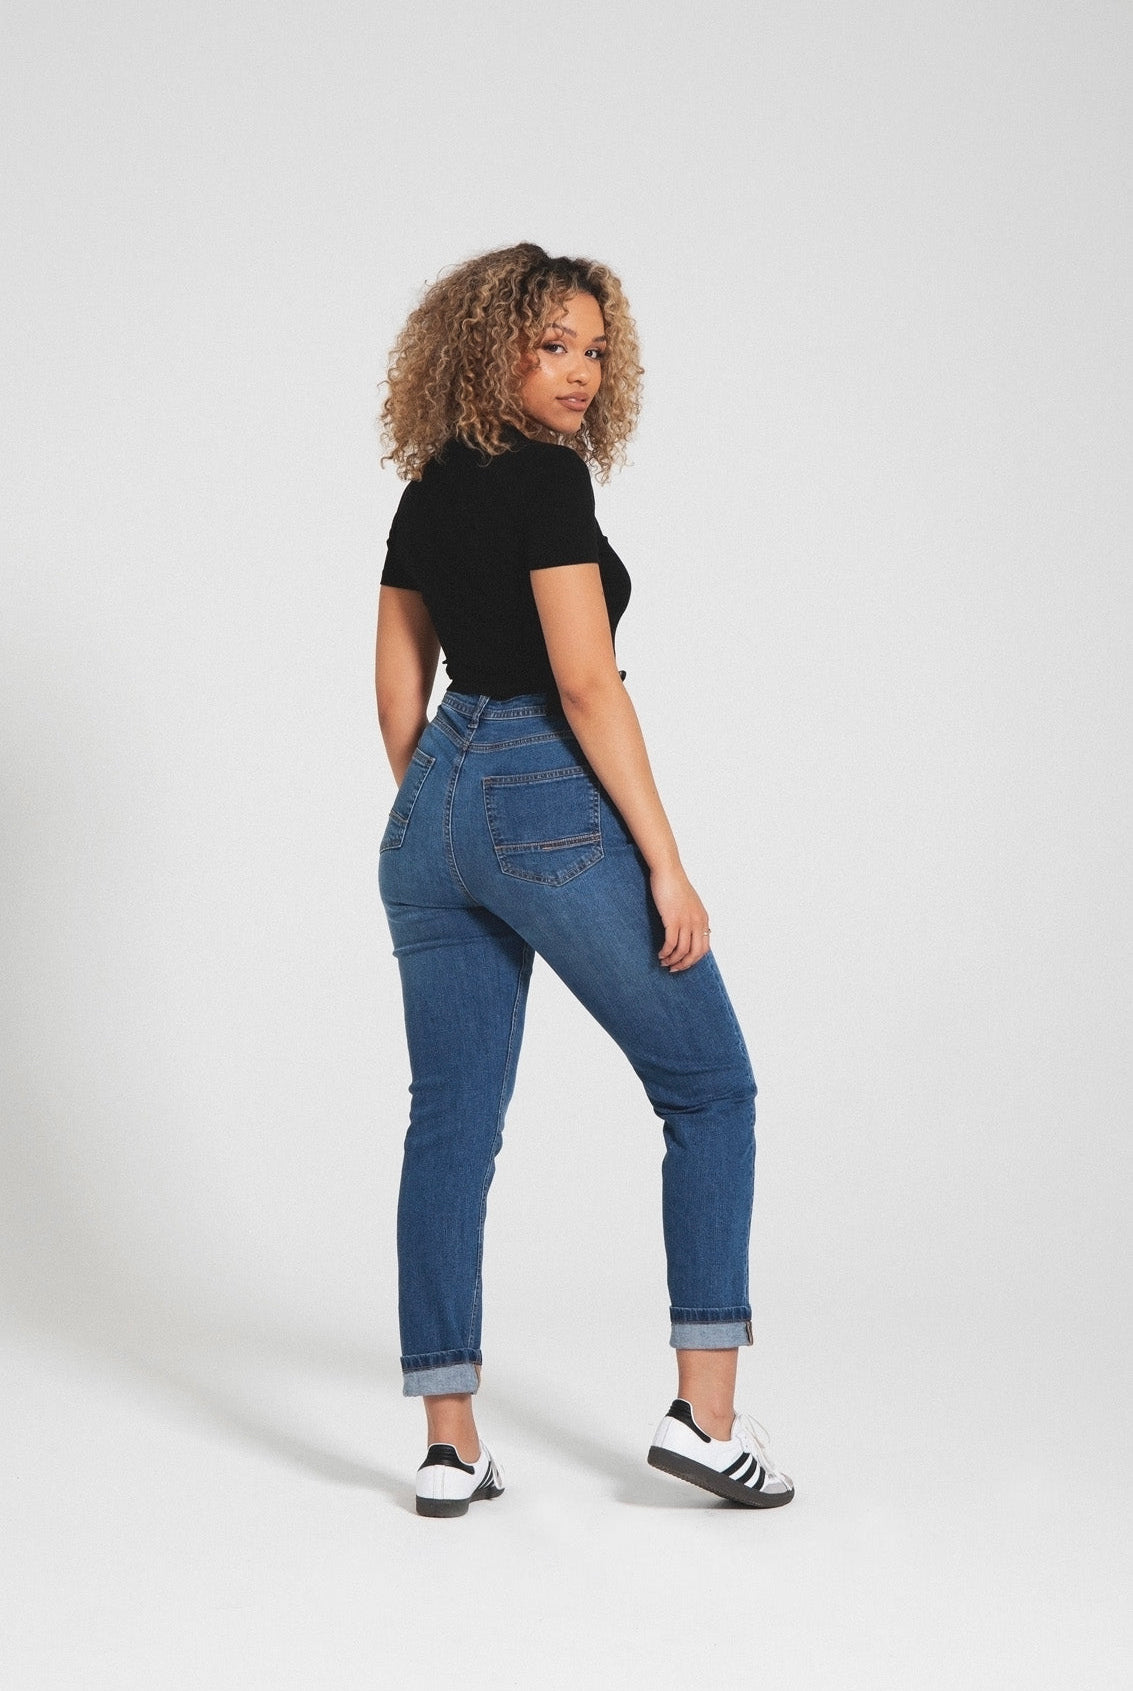 Womens 'STEVIE' Skinny Jeans - MID BLUE - Shop at www.Bench.co.uk #LoveMyHood